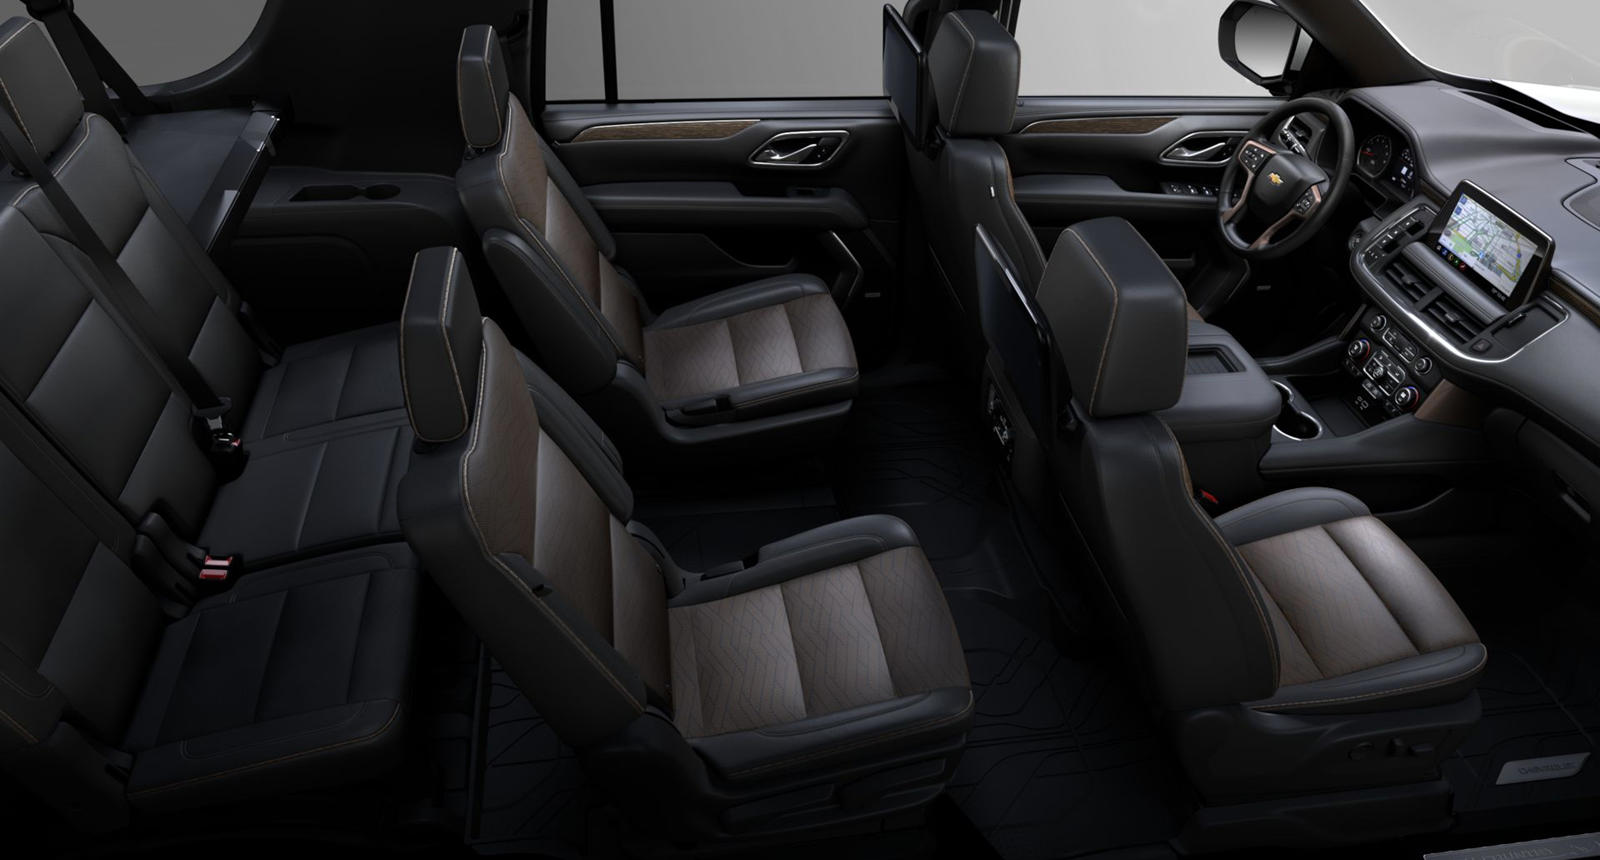 GMC Suburban interior - Seats